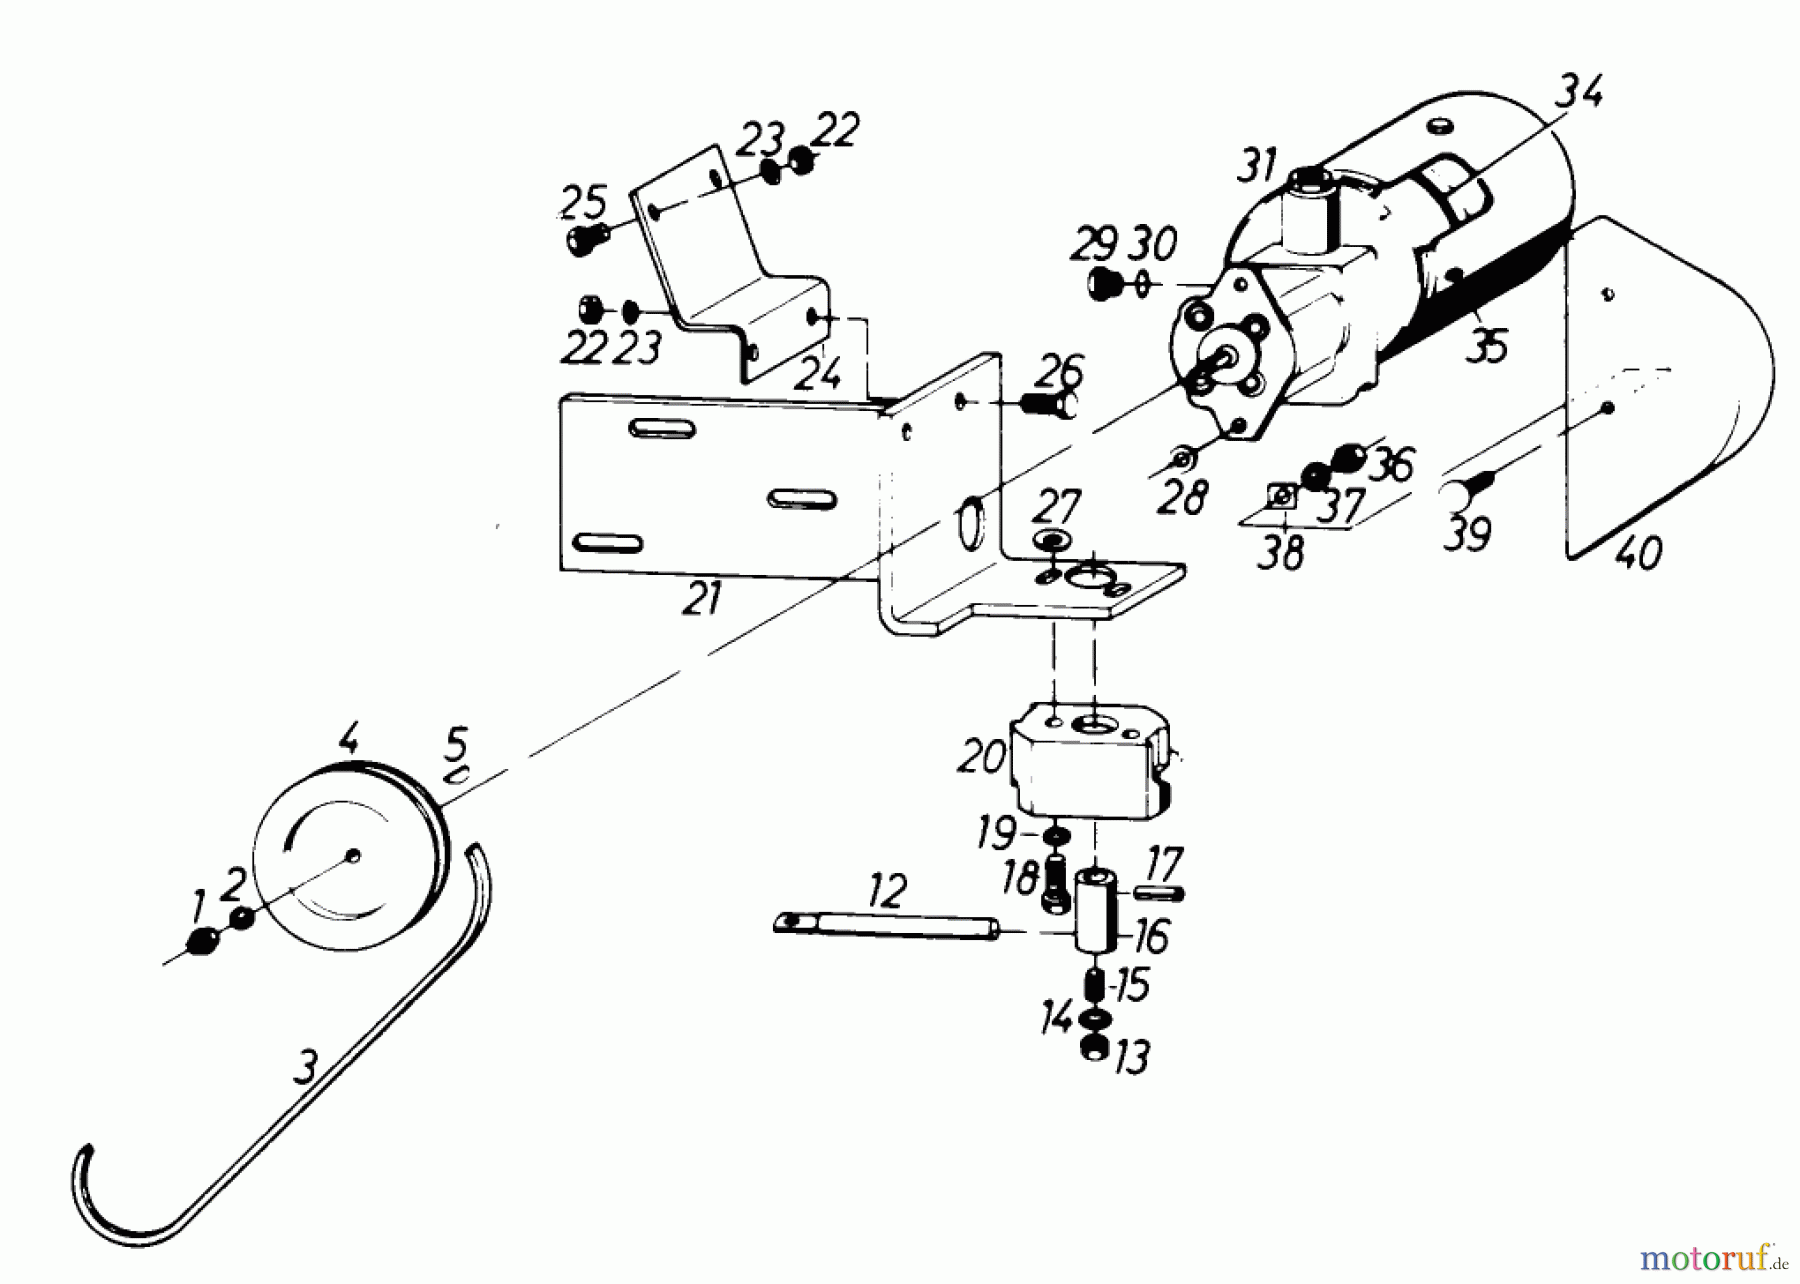  Toro Neu Mowers, Lawn & Garden Tractor Seite 1 61-20RG01 (D-250) - Toro D-250 10-Speed Tractor, 1977 HYDRAULIC UNIT